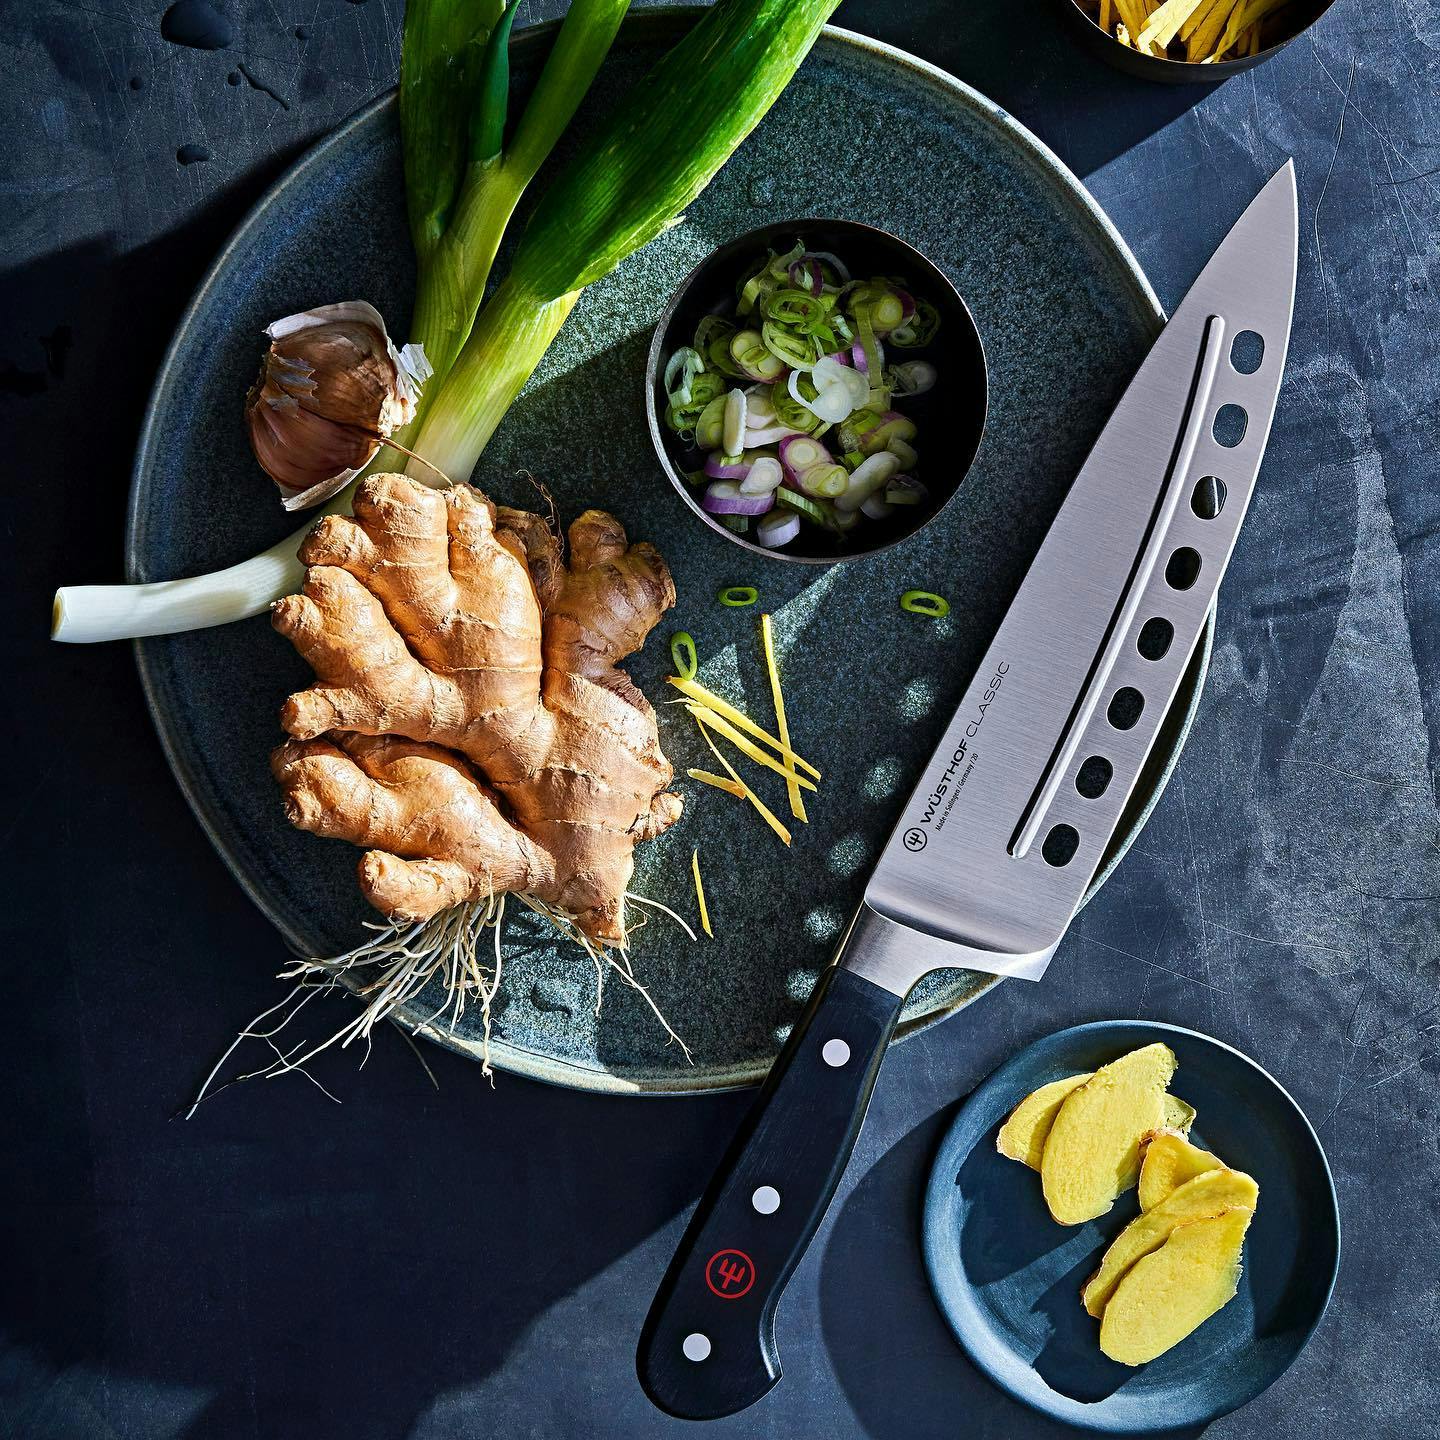 Classic Vegetable Knife